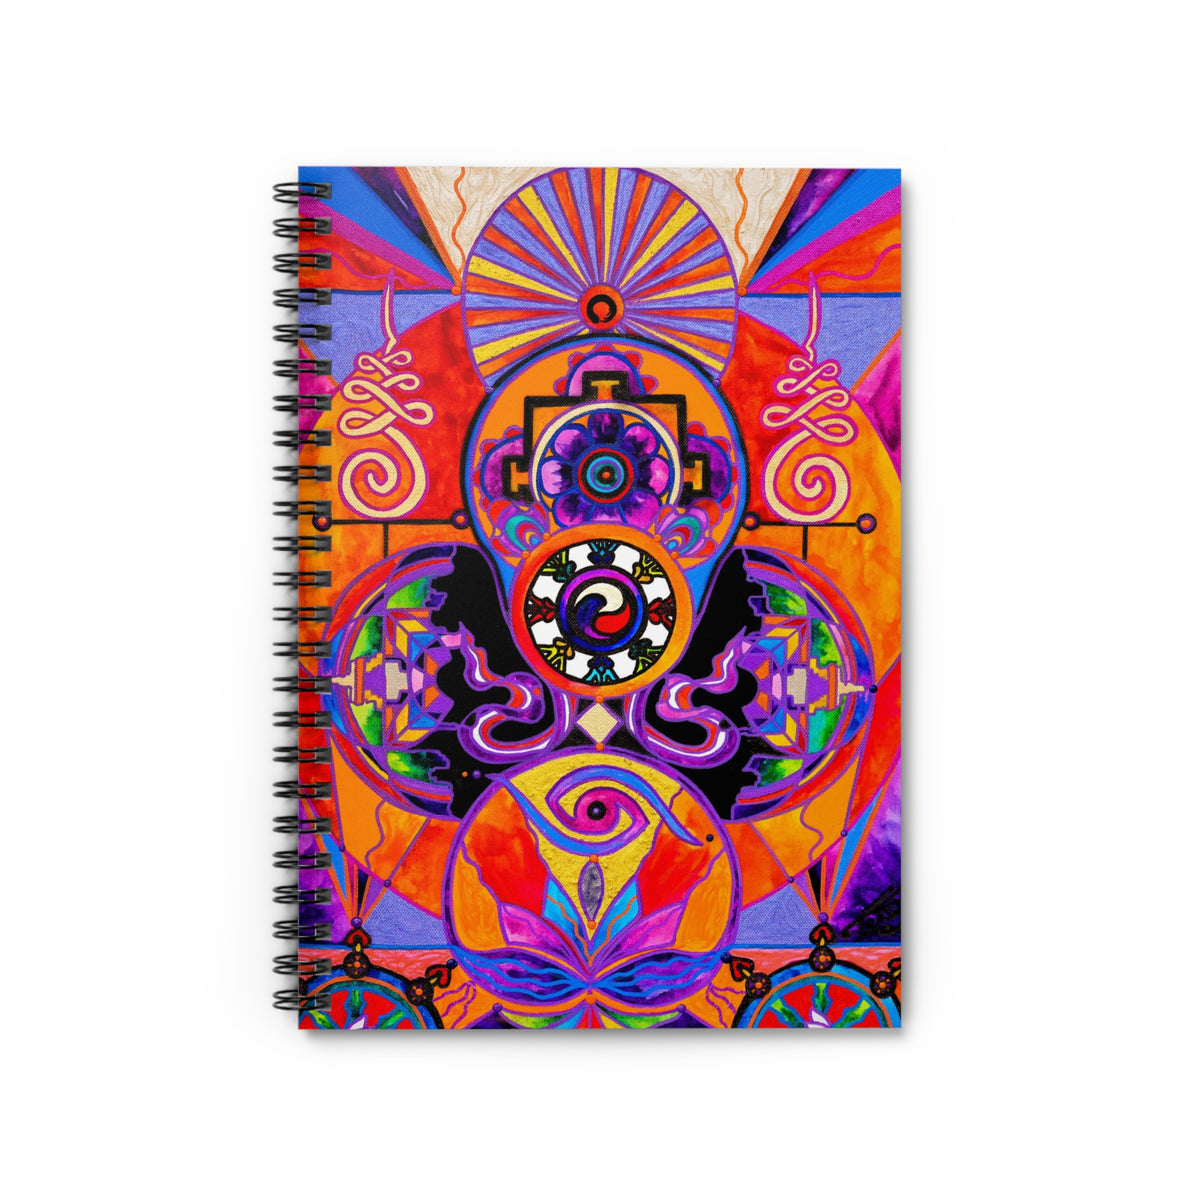 Buddha Consciousness - Spiral Notebook - Ruled Line